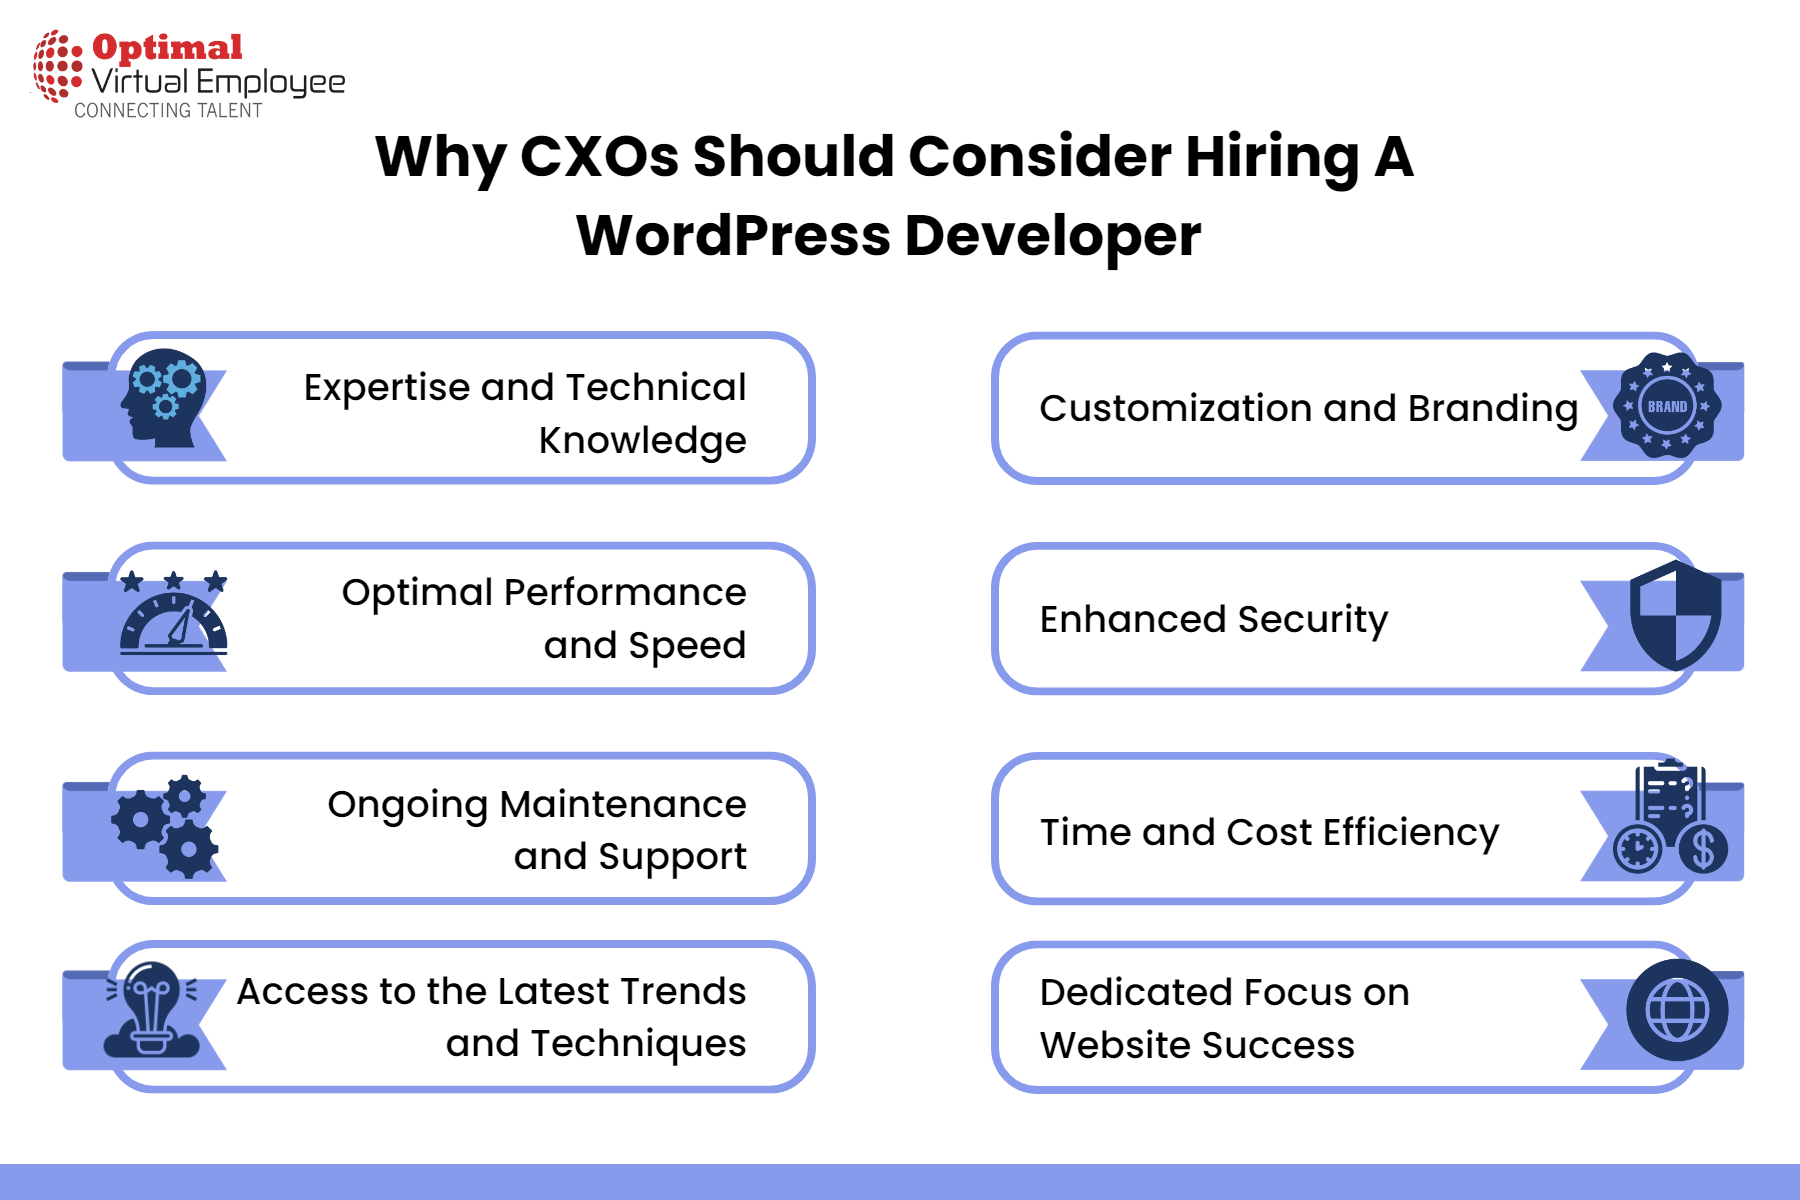 Why CXOs Should Consider Hiring A WordPress Developer